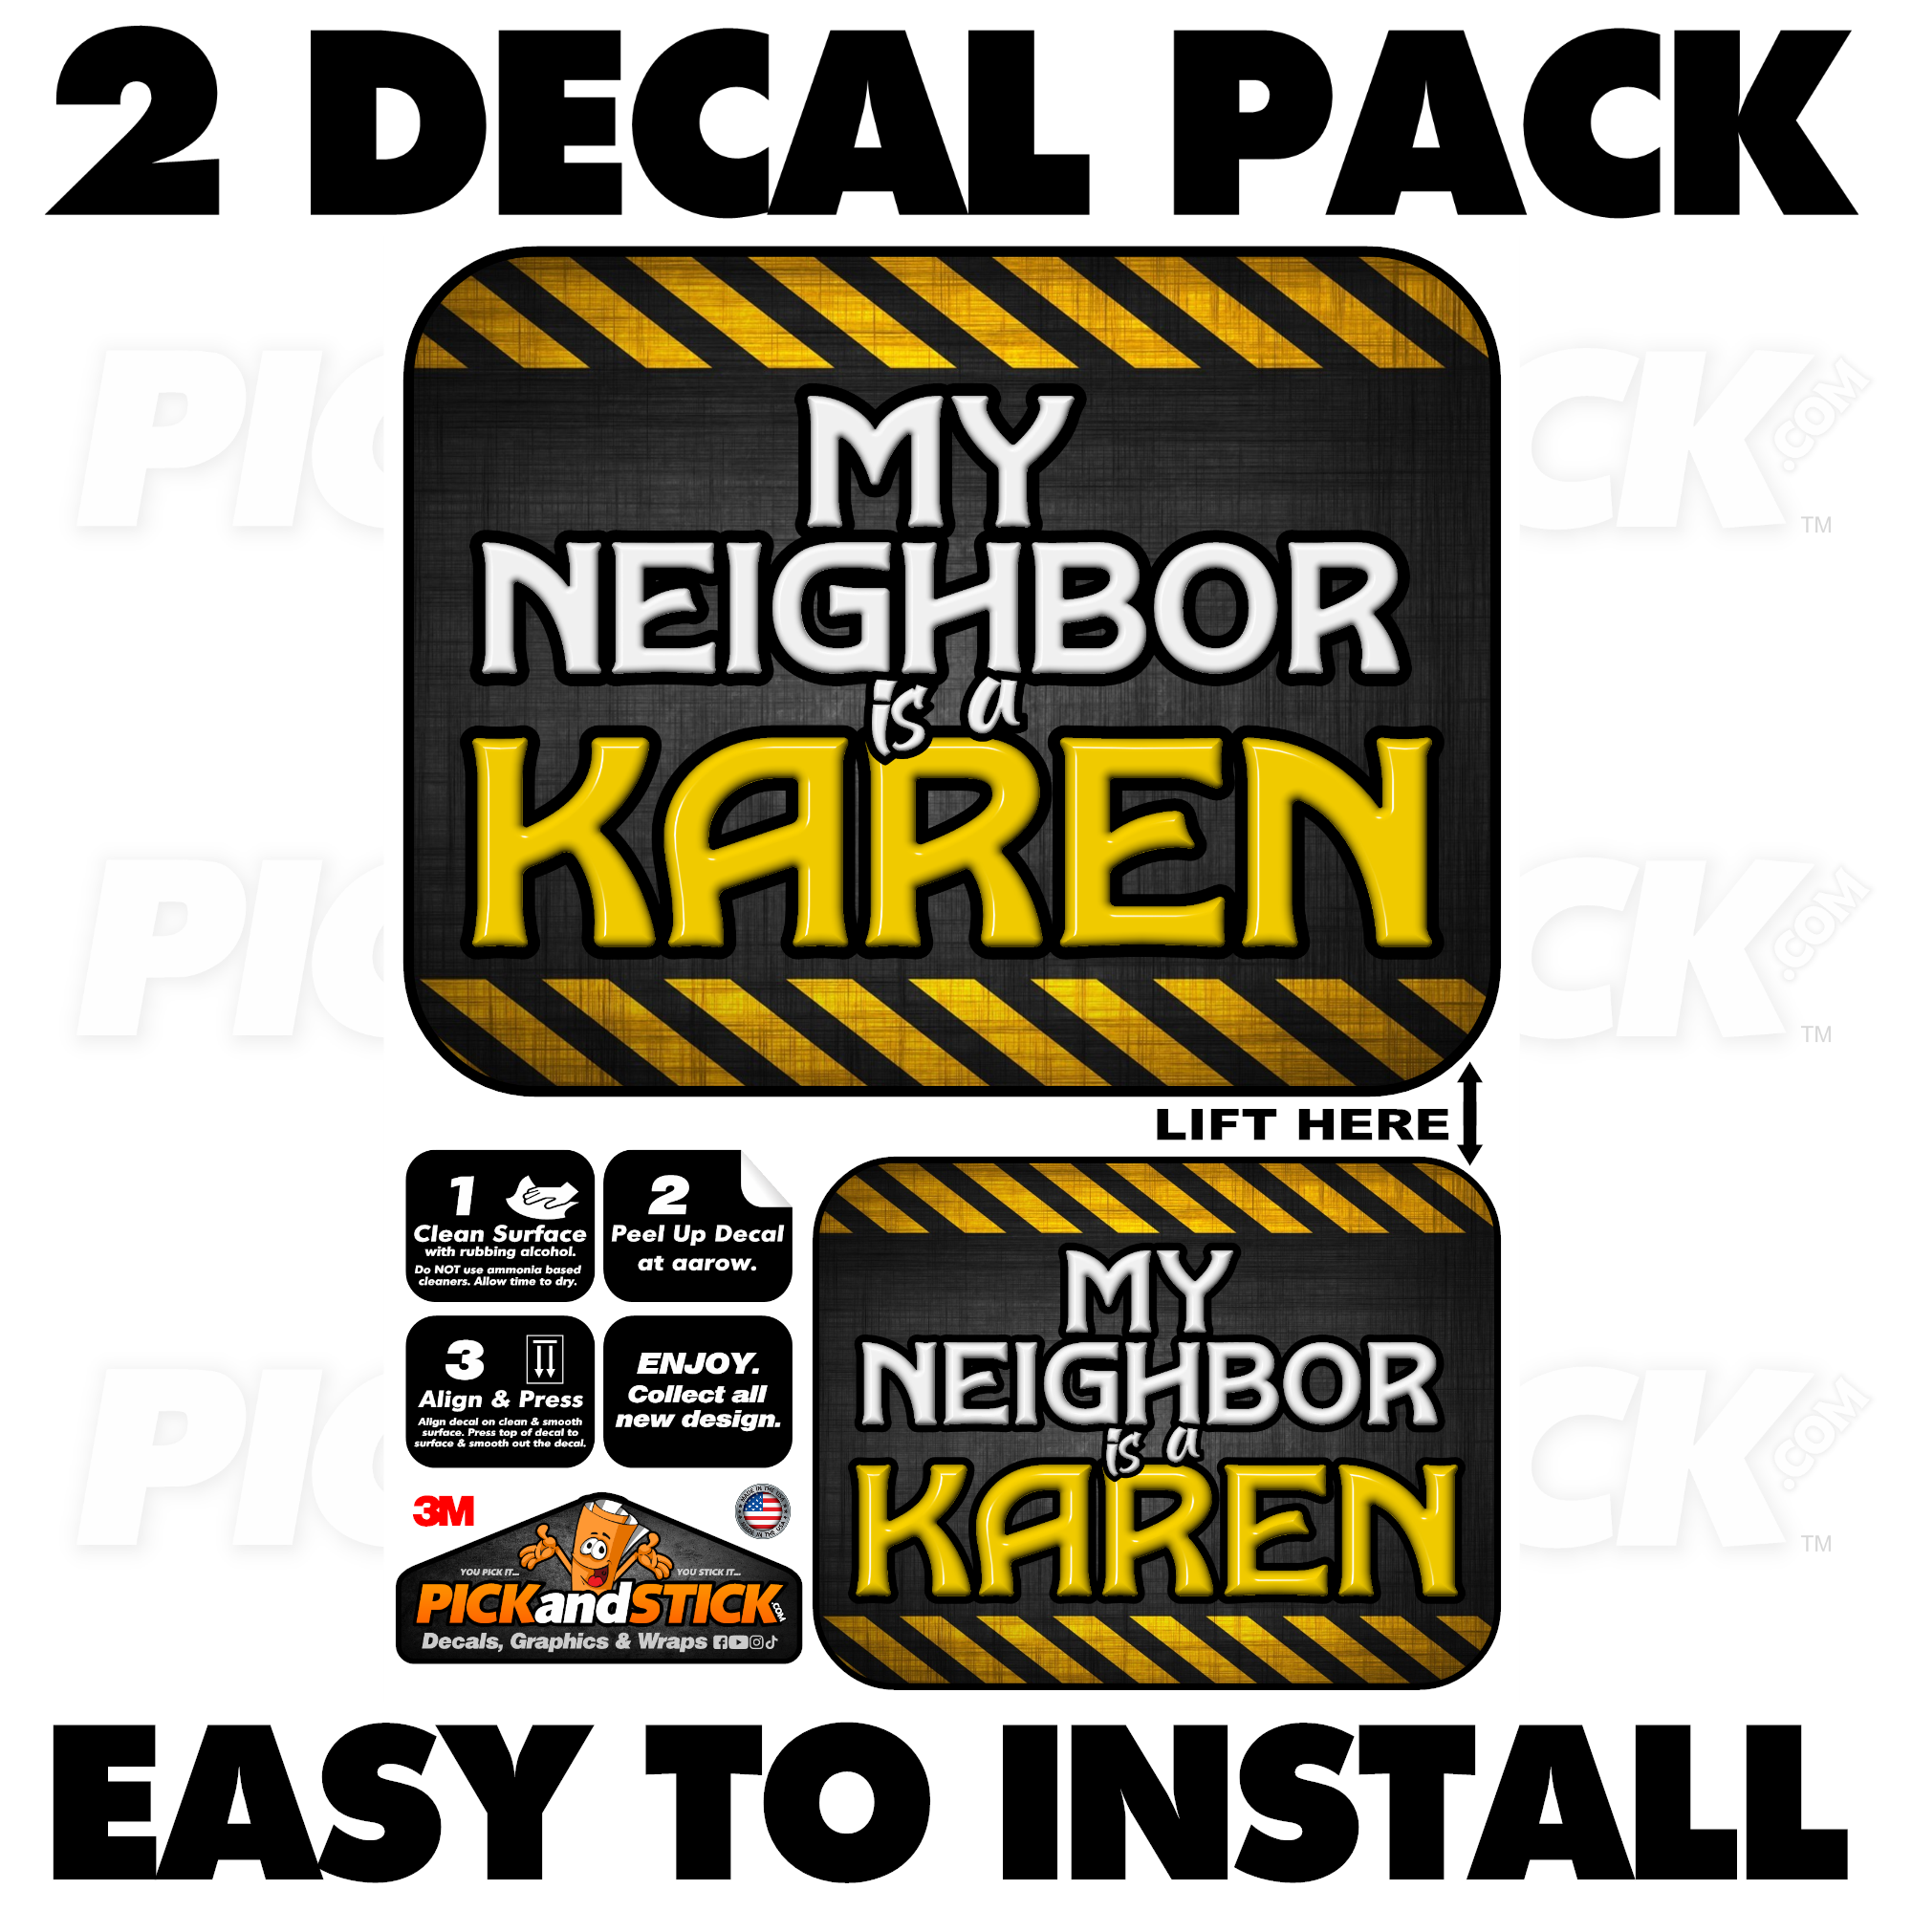 My Neighbor is a Karen - 2 Decal Pack